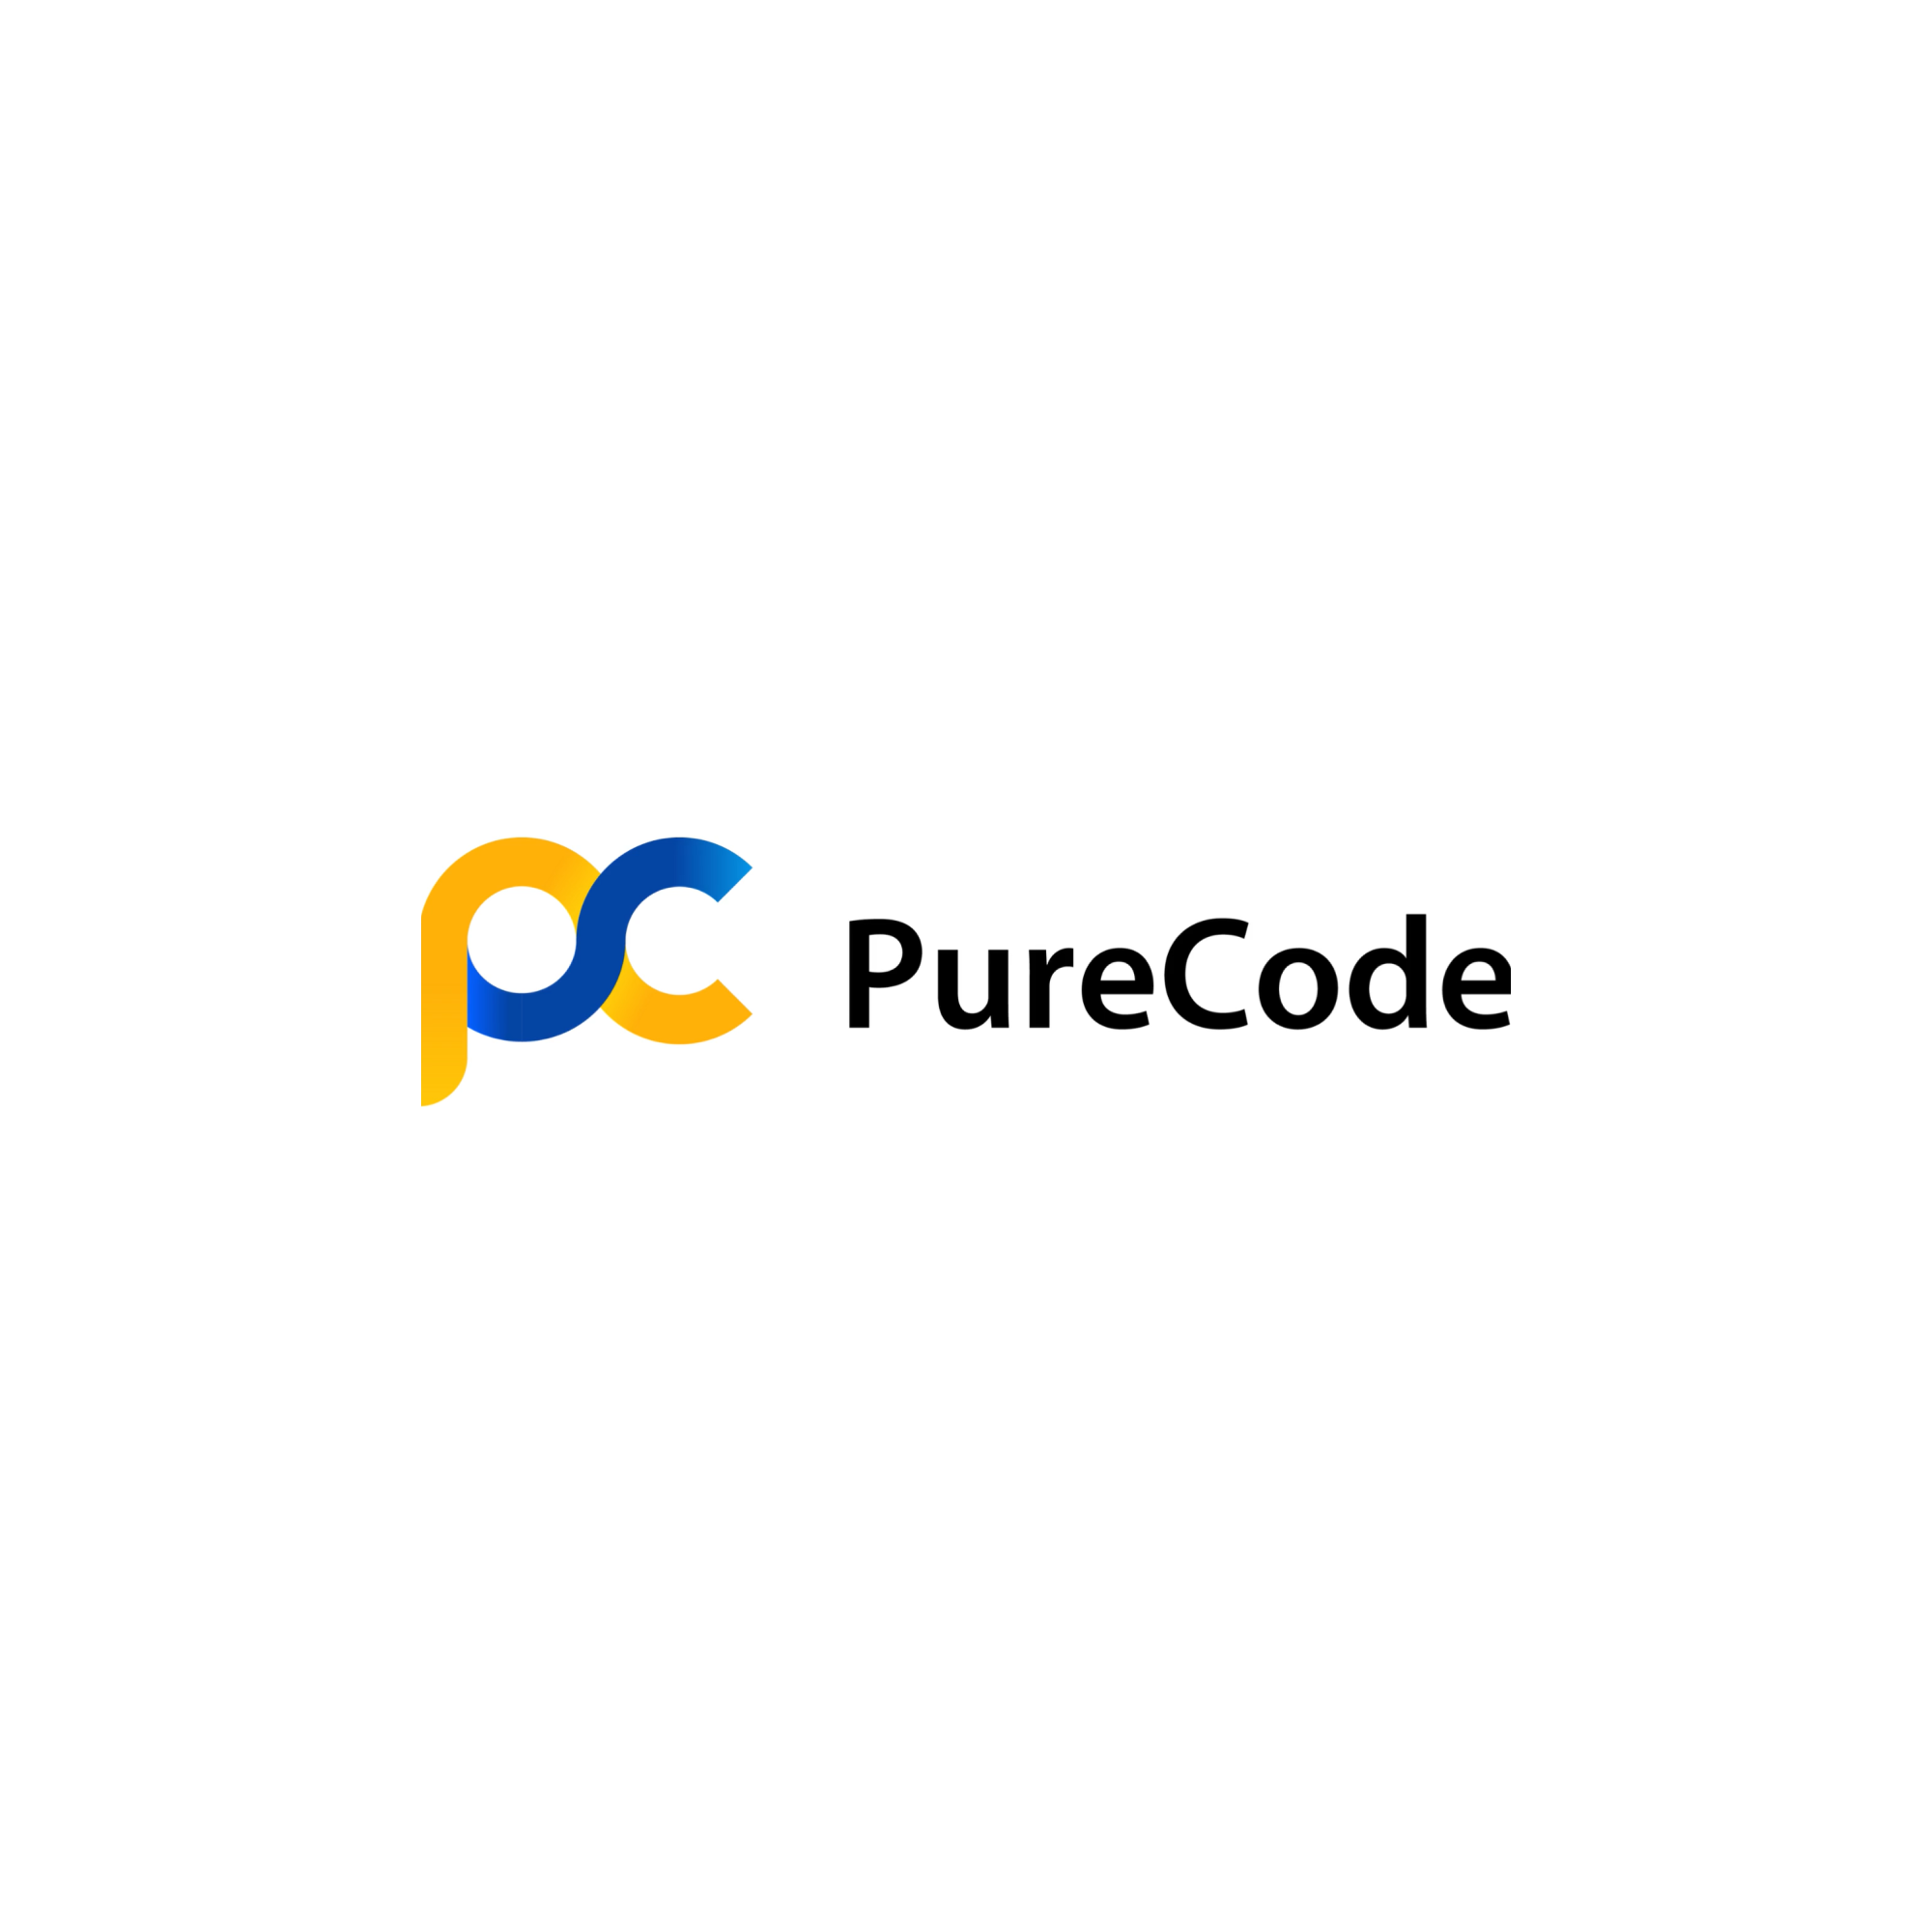 PureCode